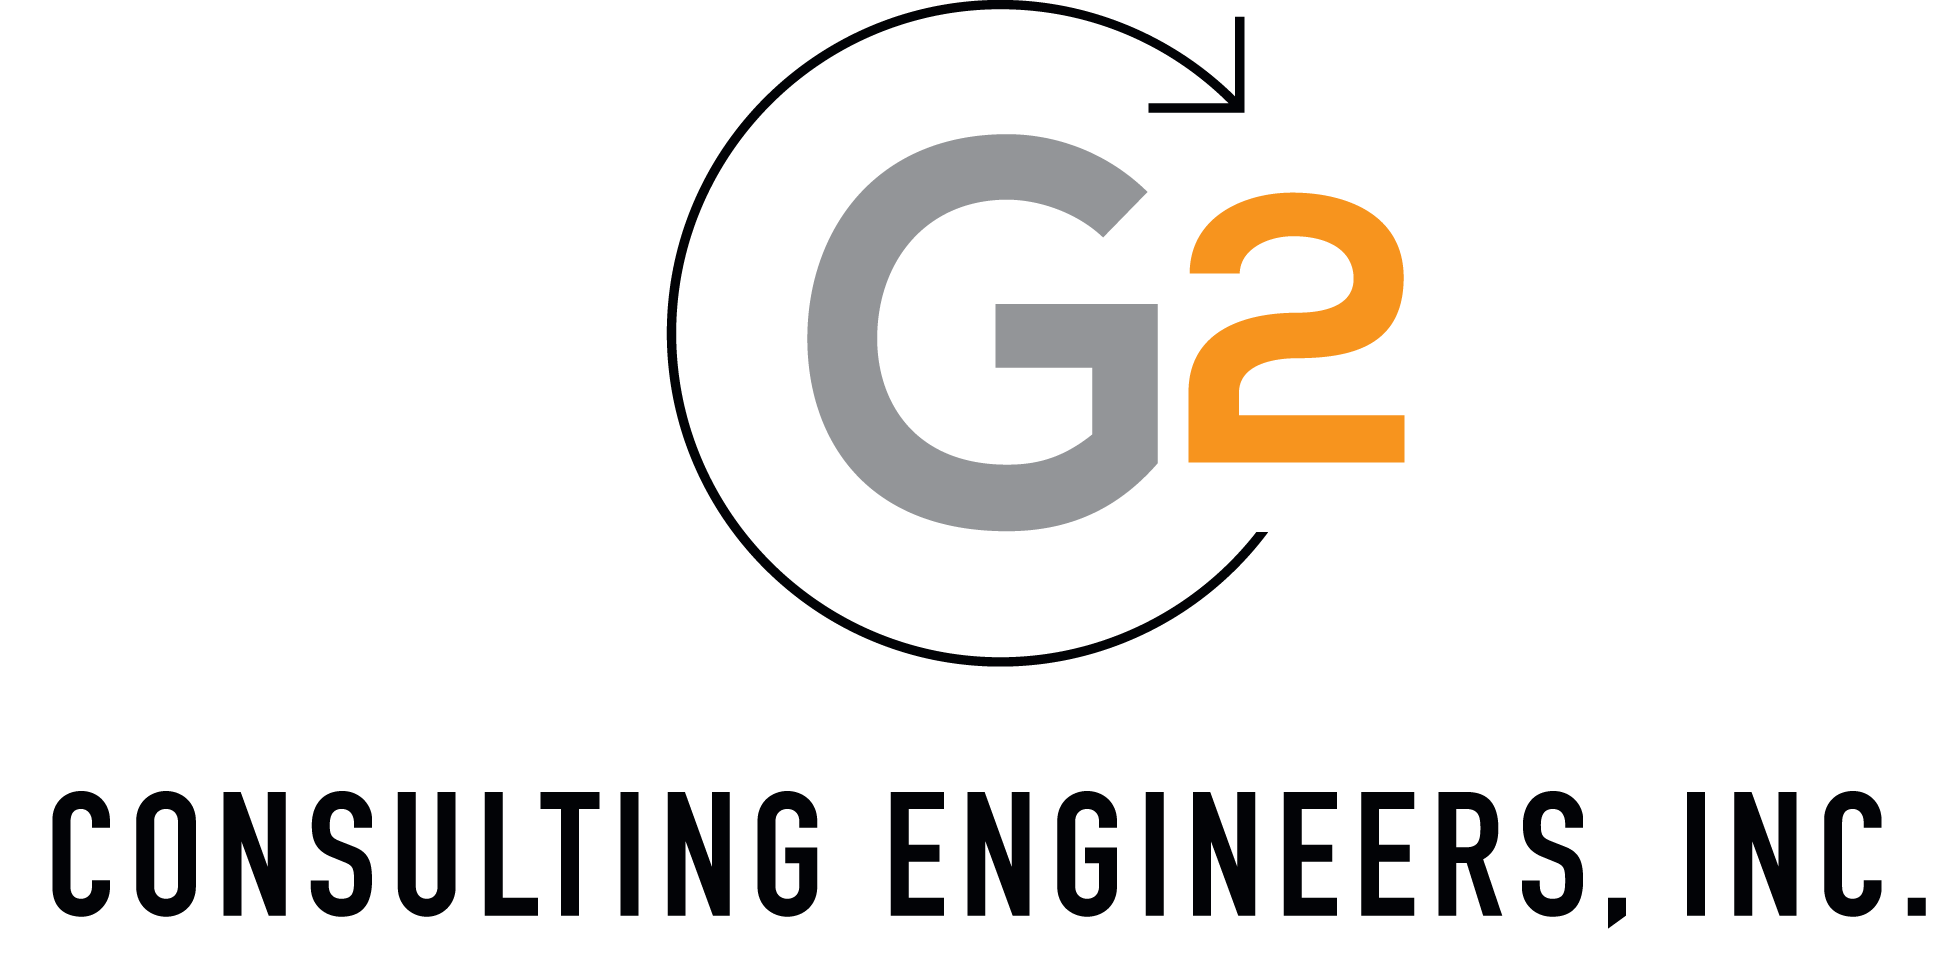 Gold - G2 Engineering